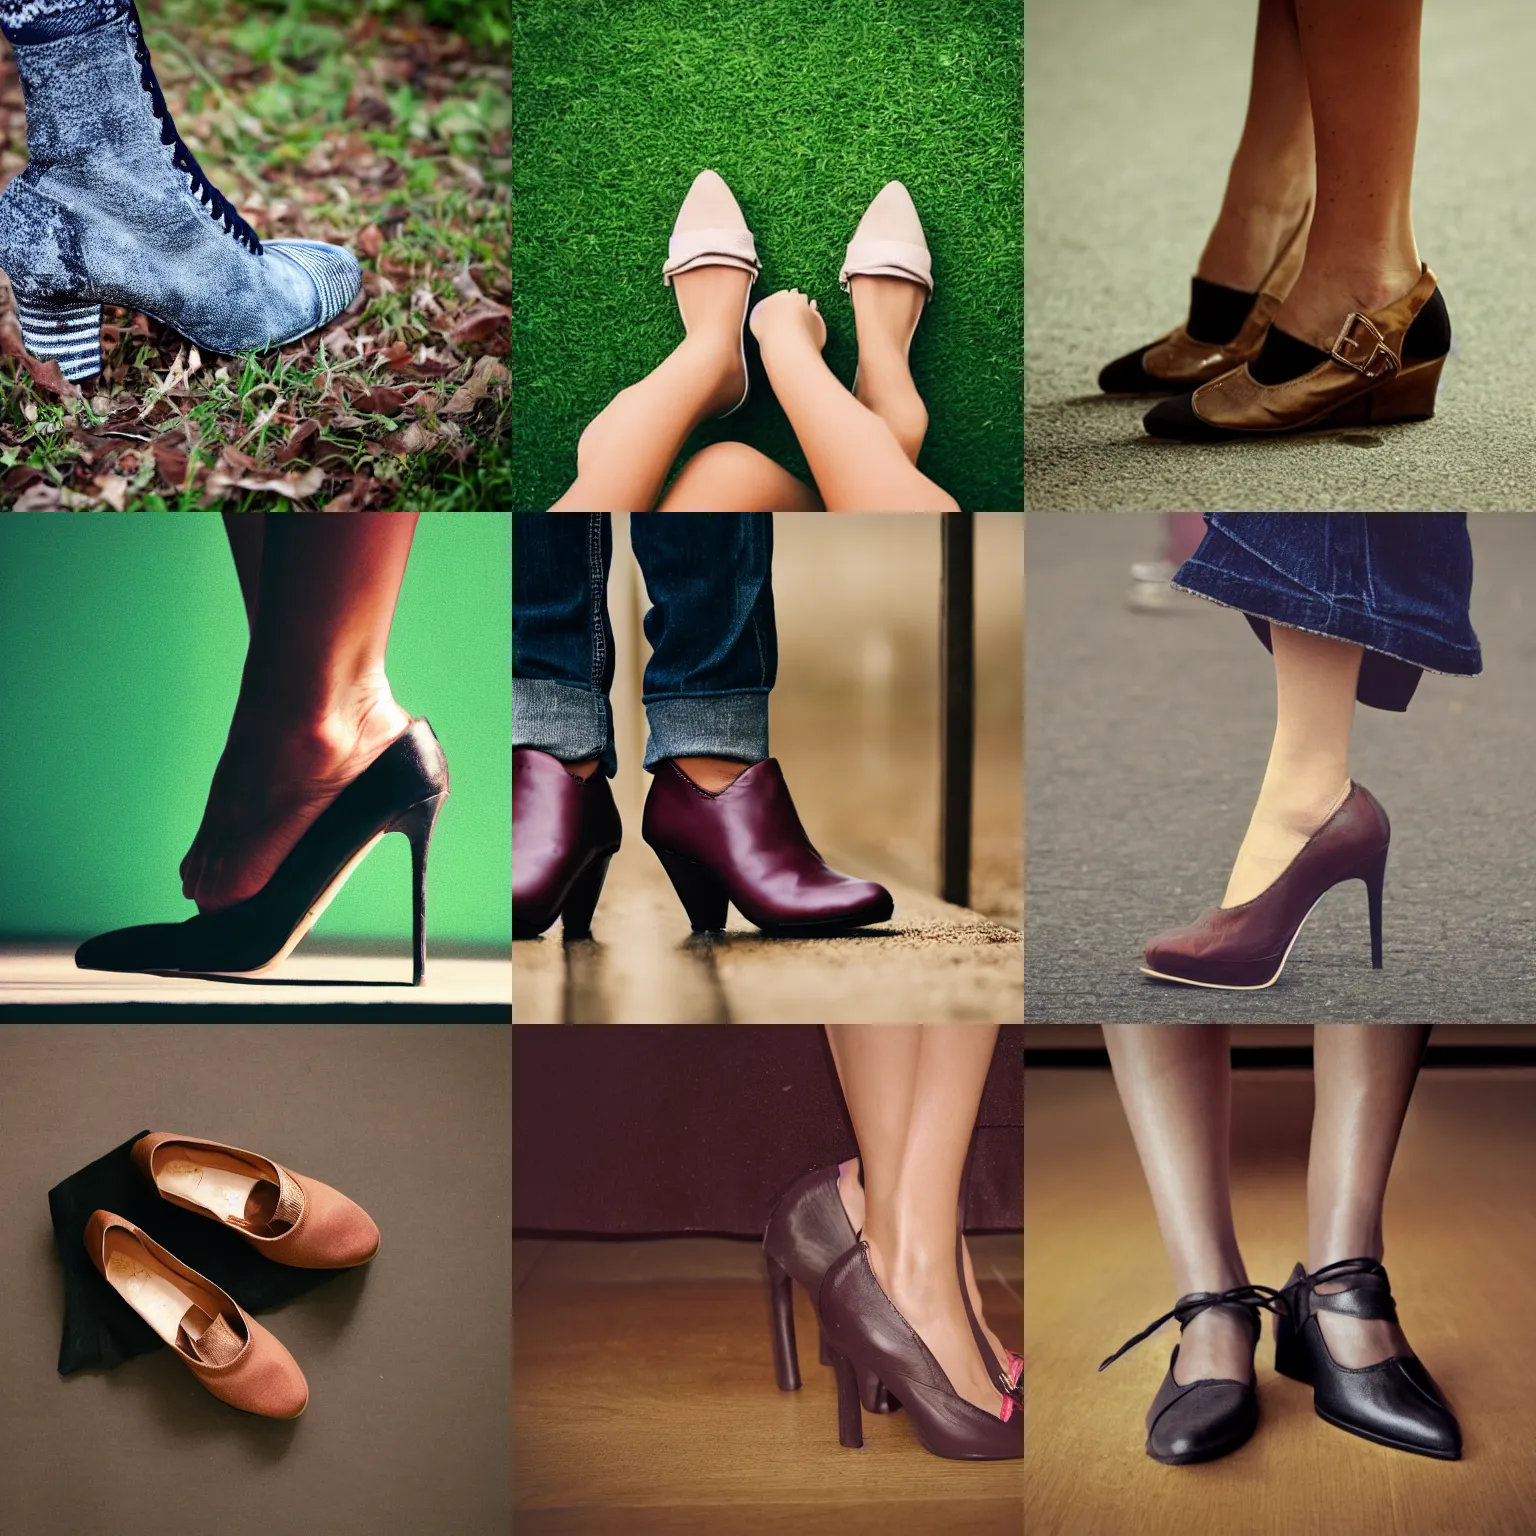 Prompt: A woman's shoe